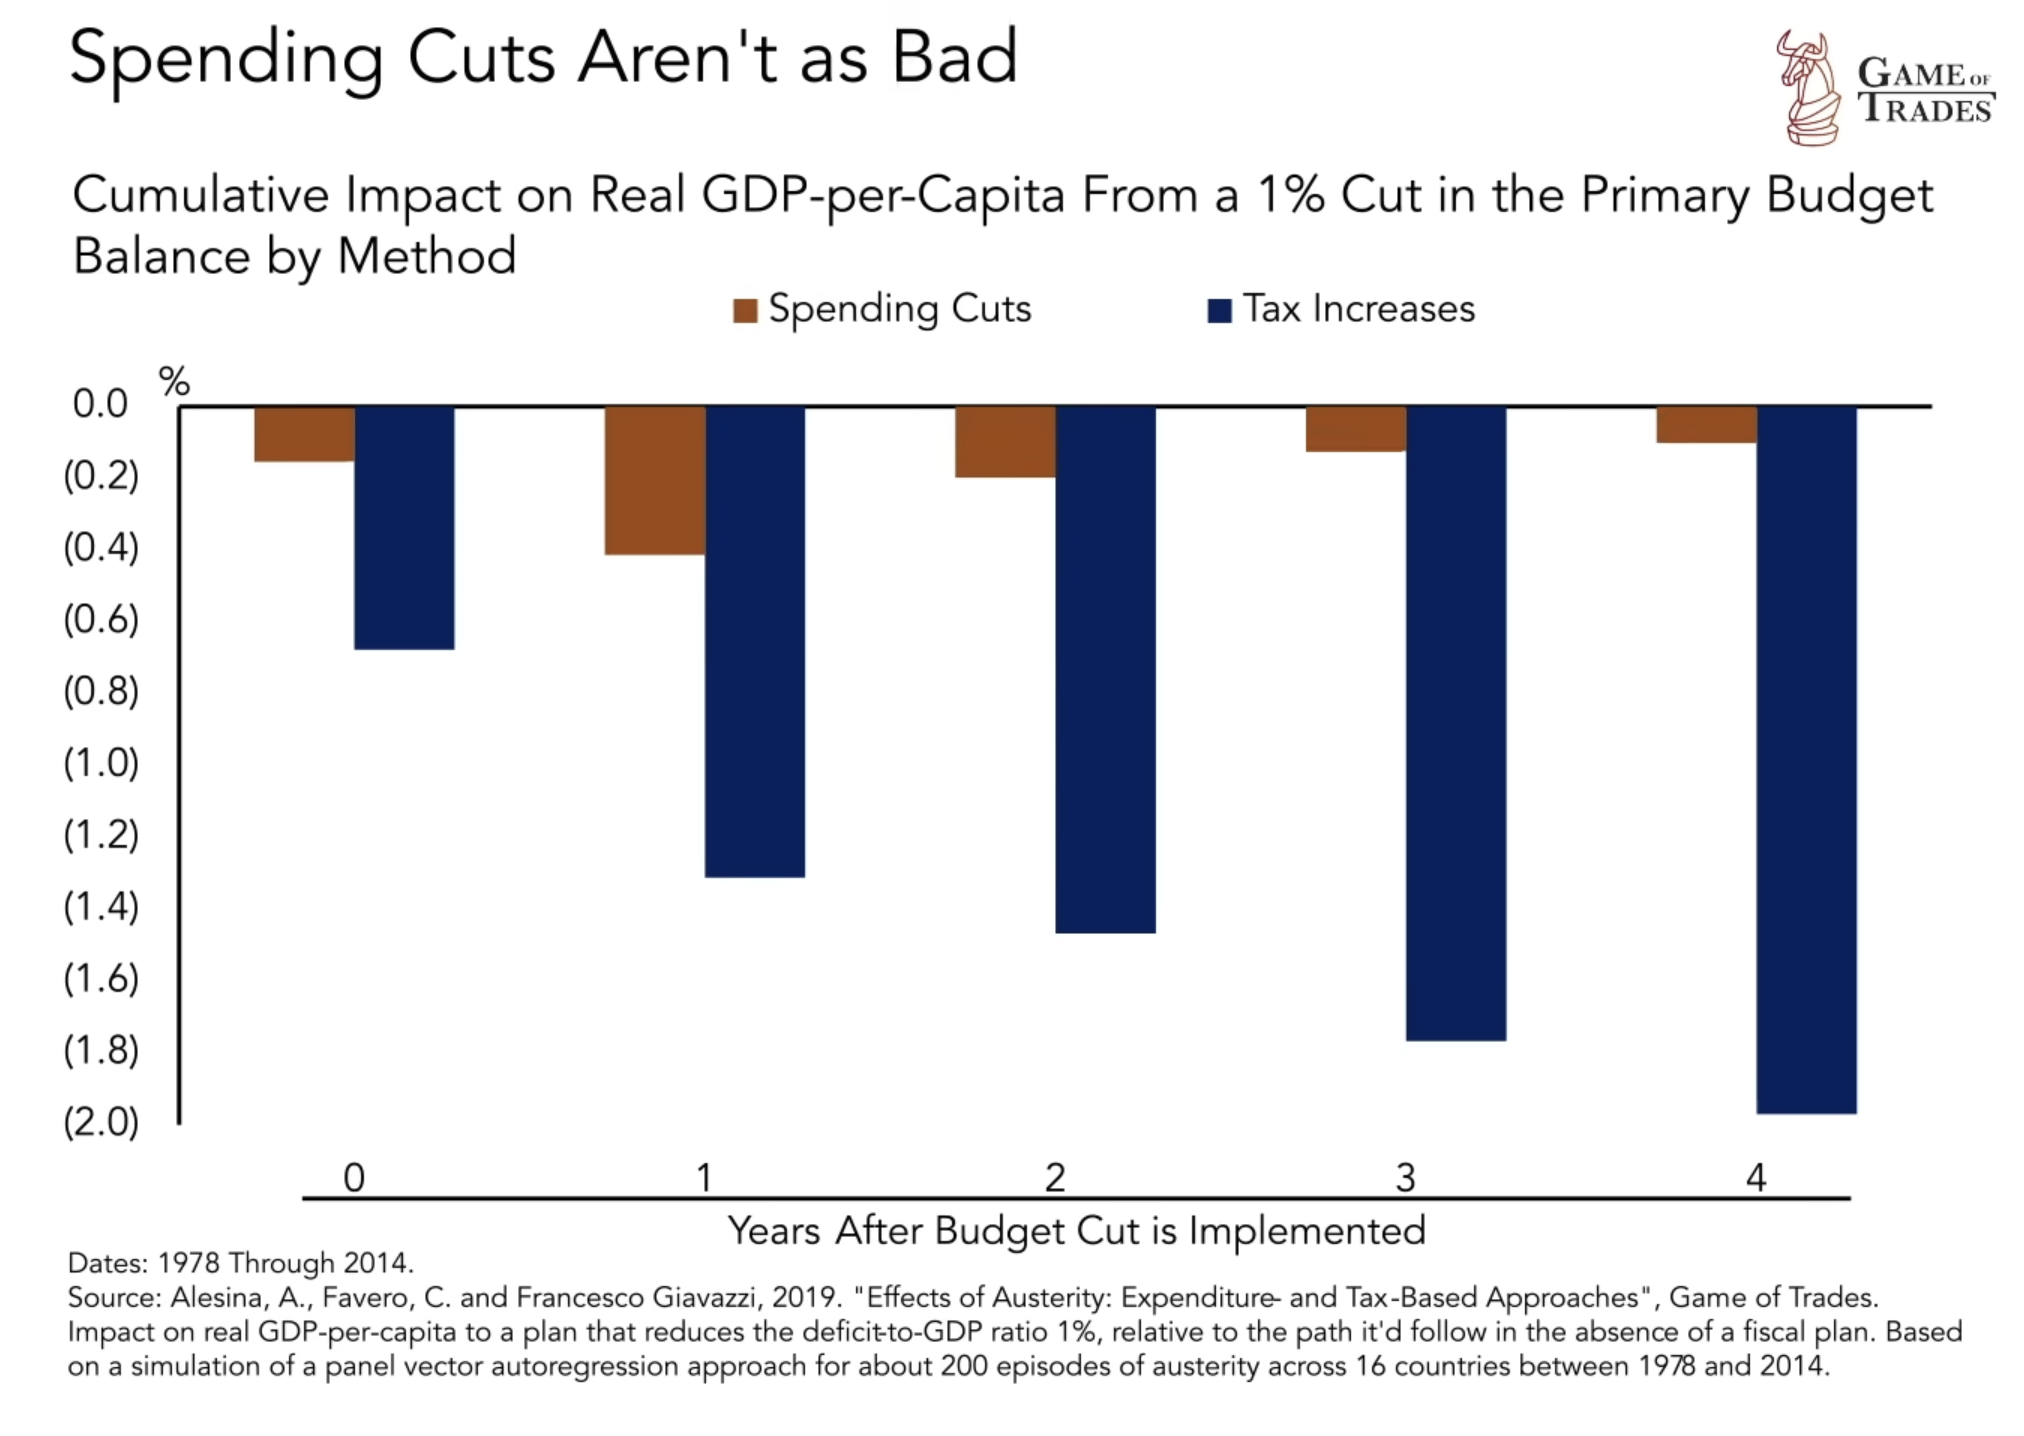 Spending Cuts Aren't as bad